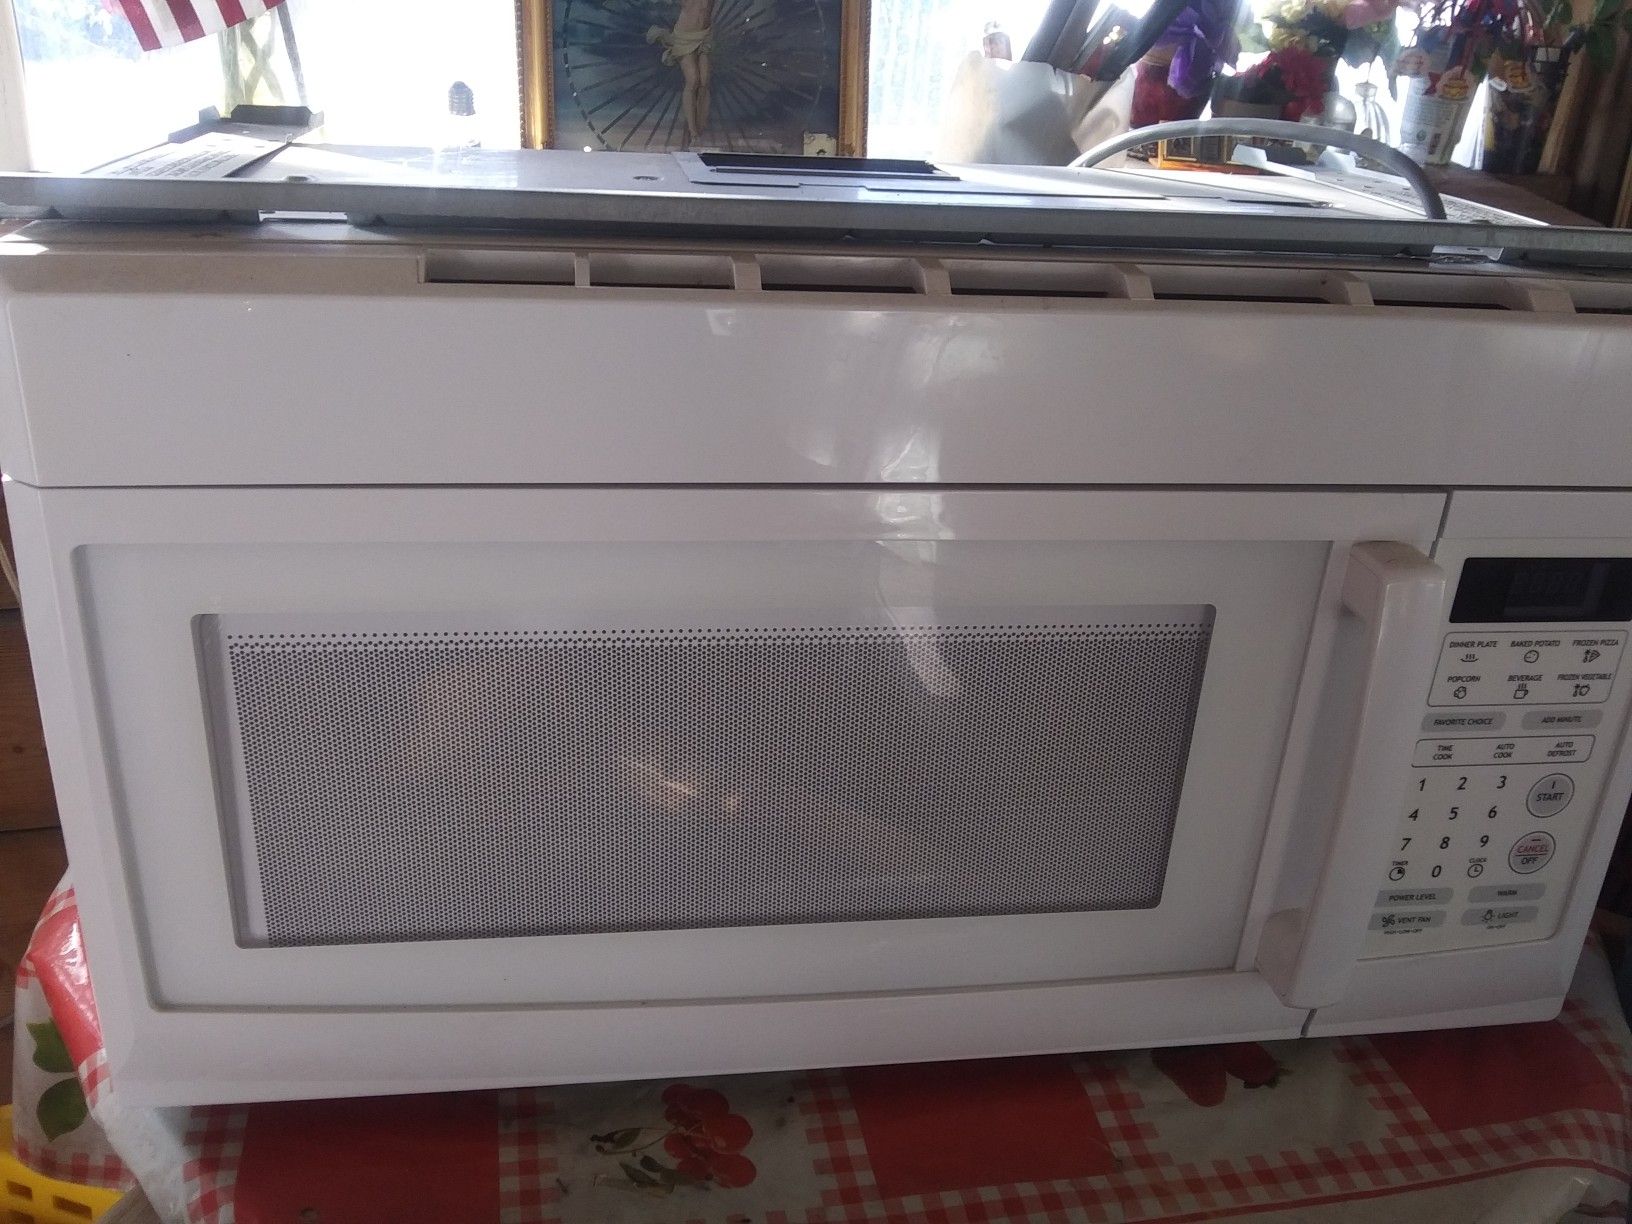 Oven range microwave